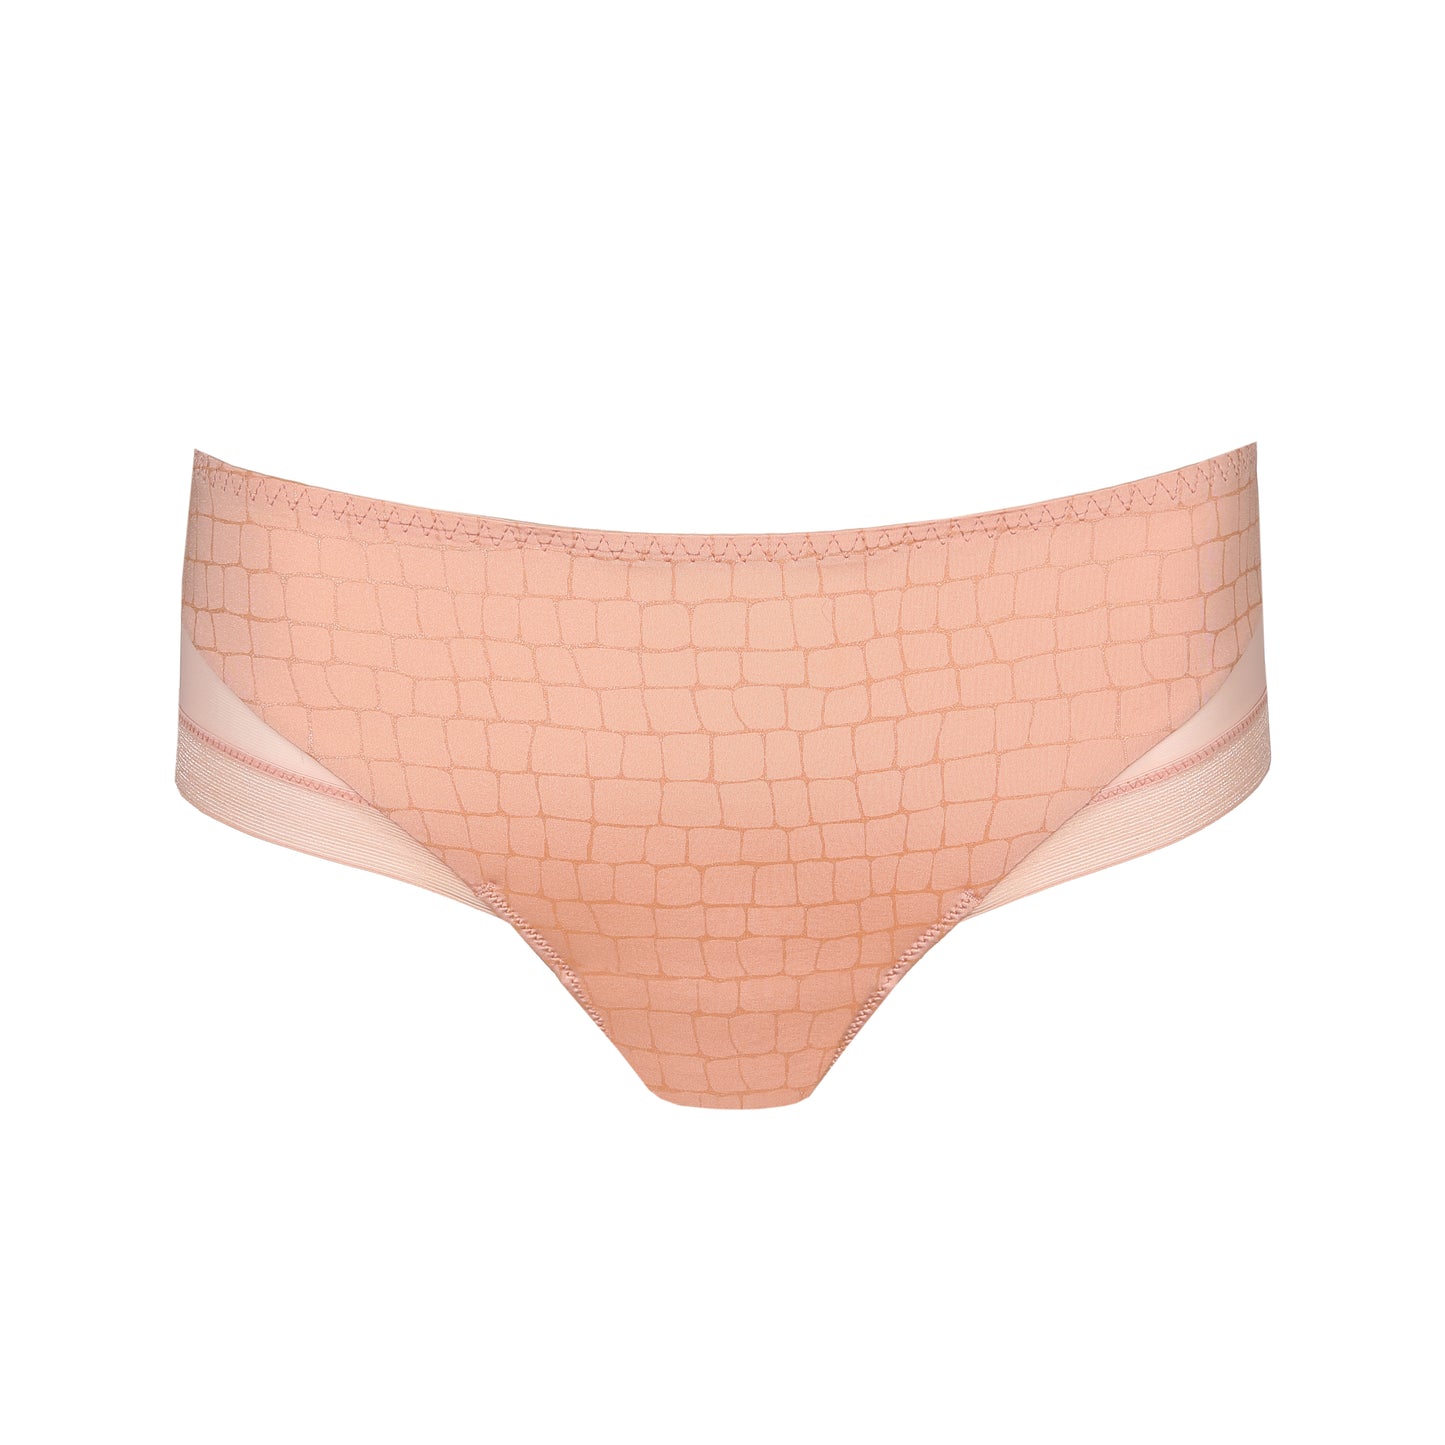 Torrance Hotpants In Dusty Pink - PrimaDonna Twist